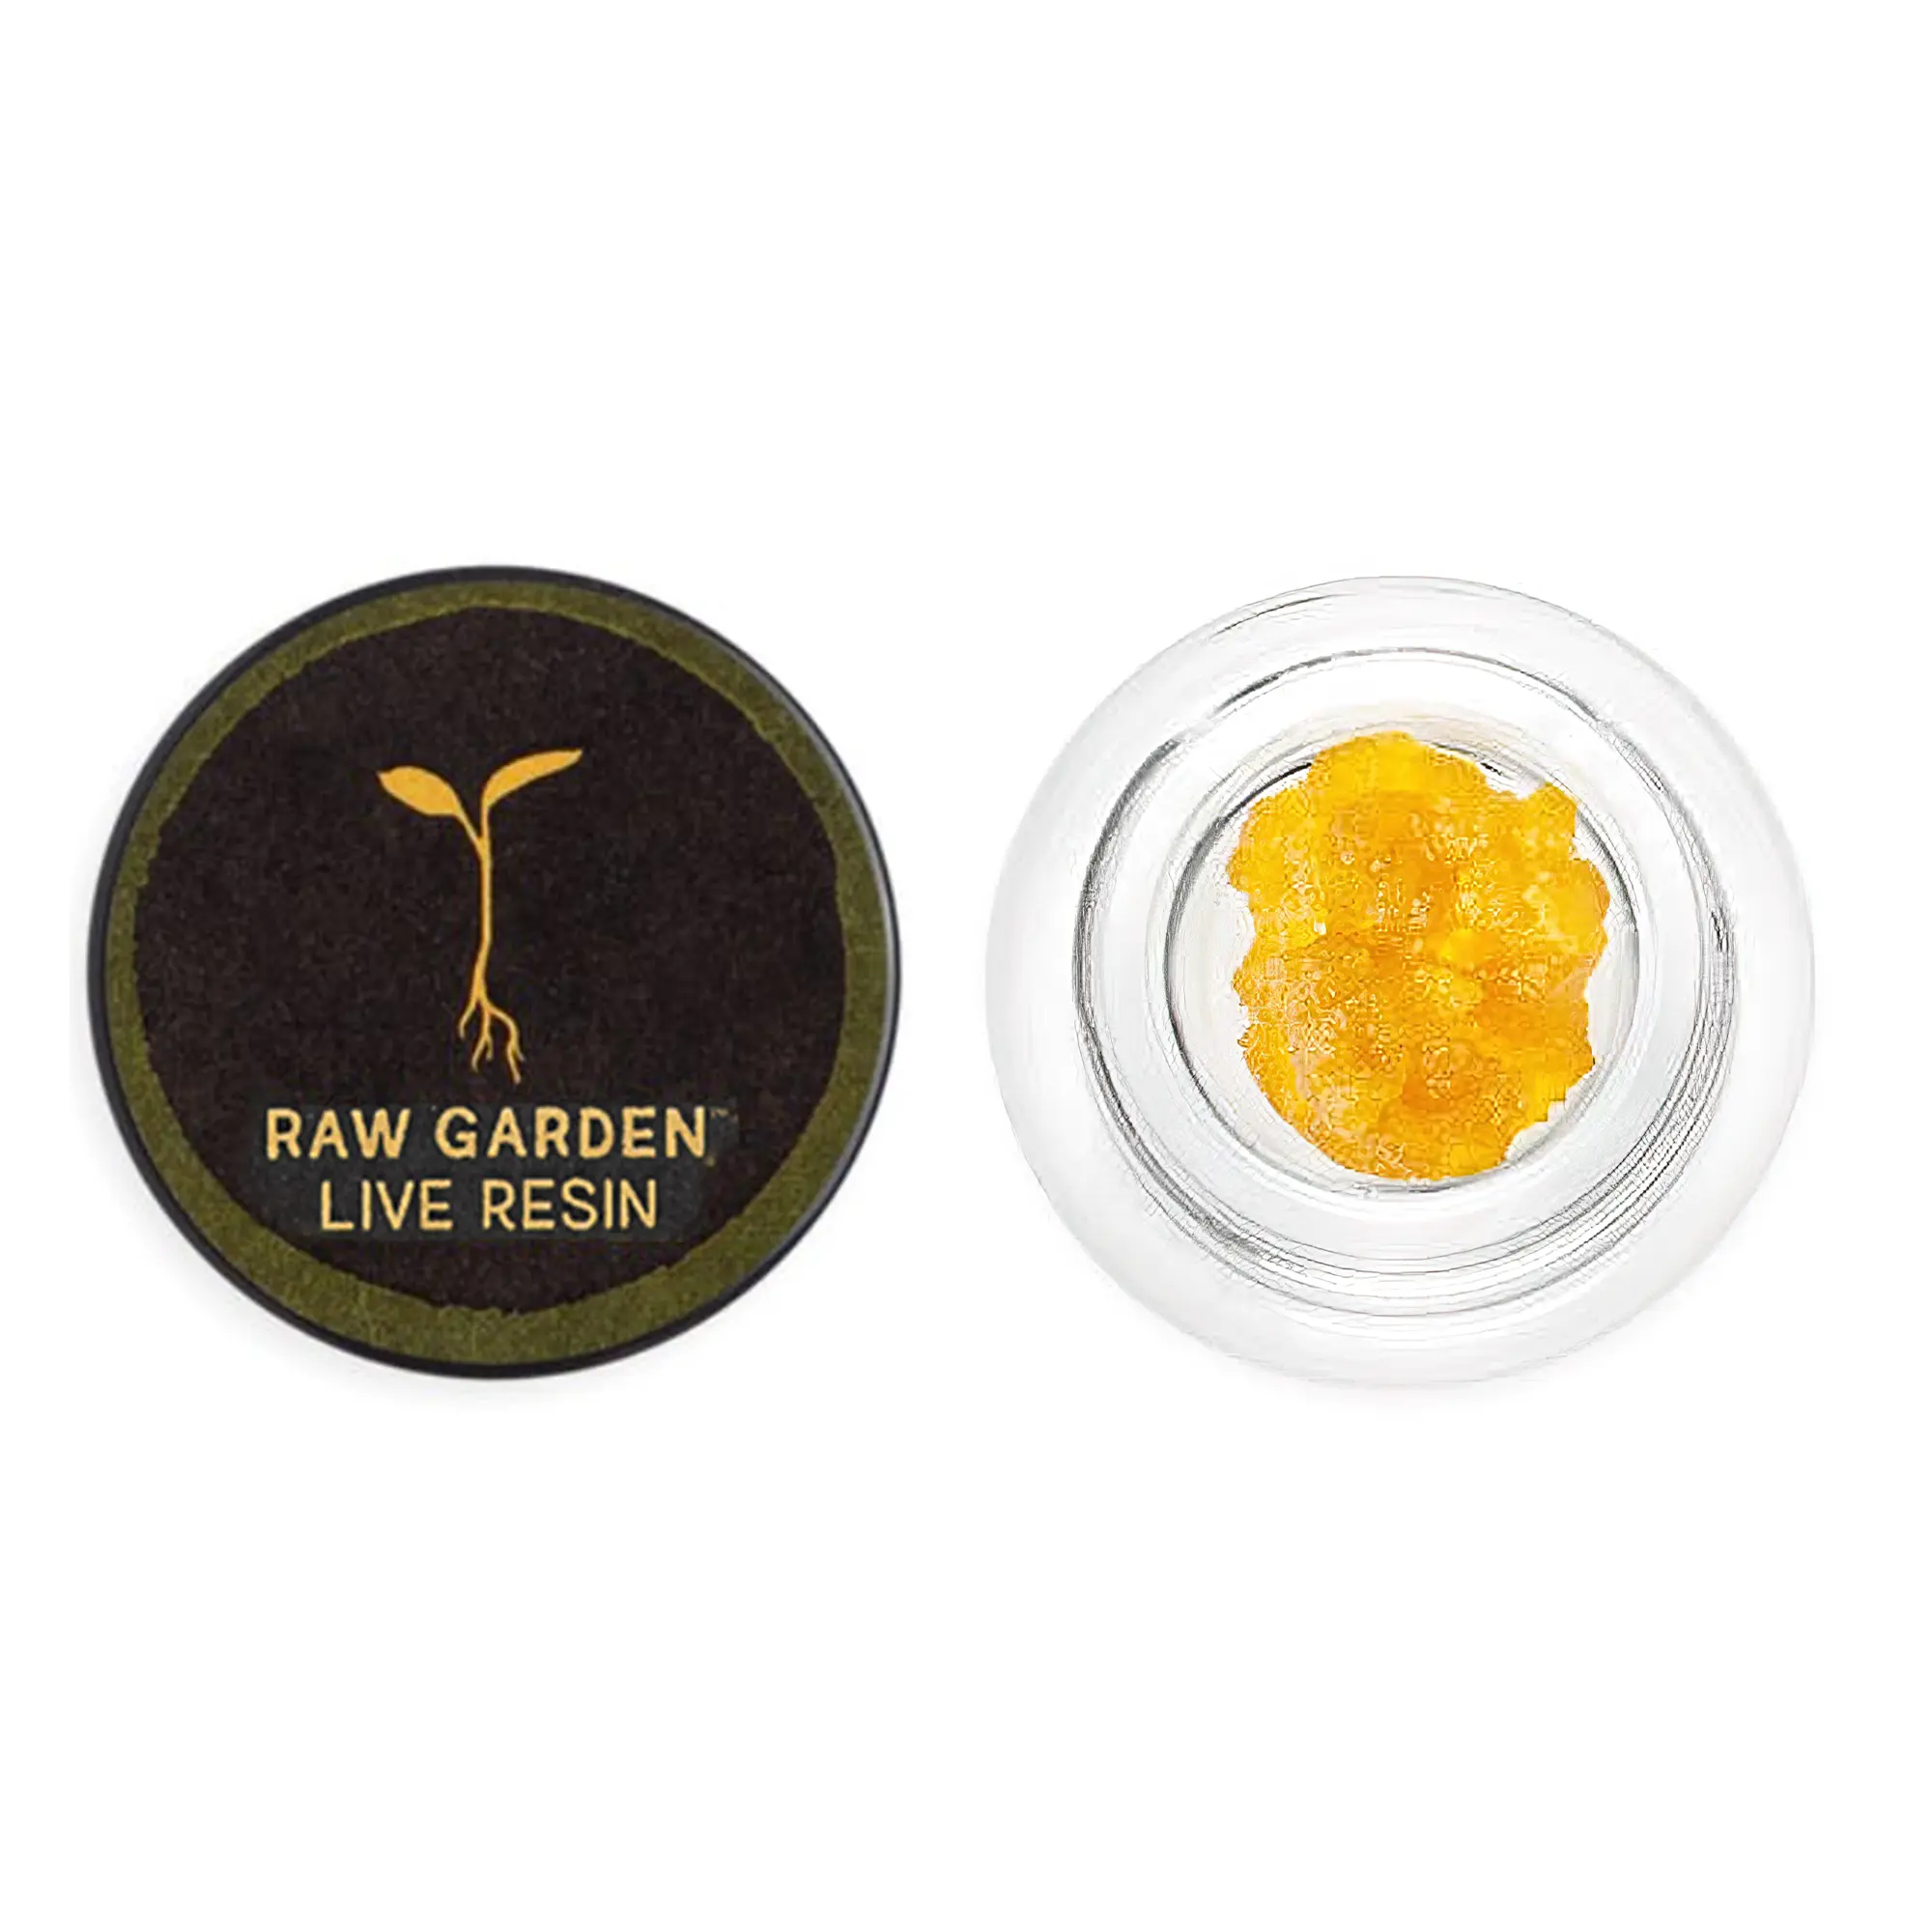 product preview image for Lemon Juice Jones Live Resin